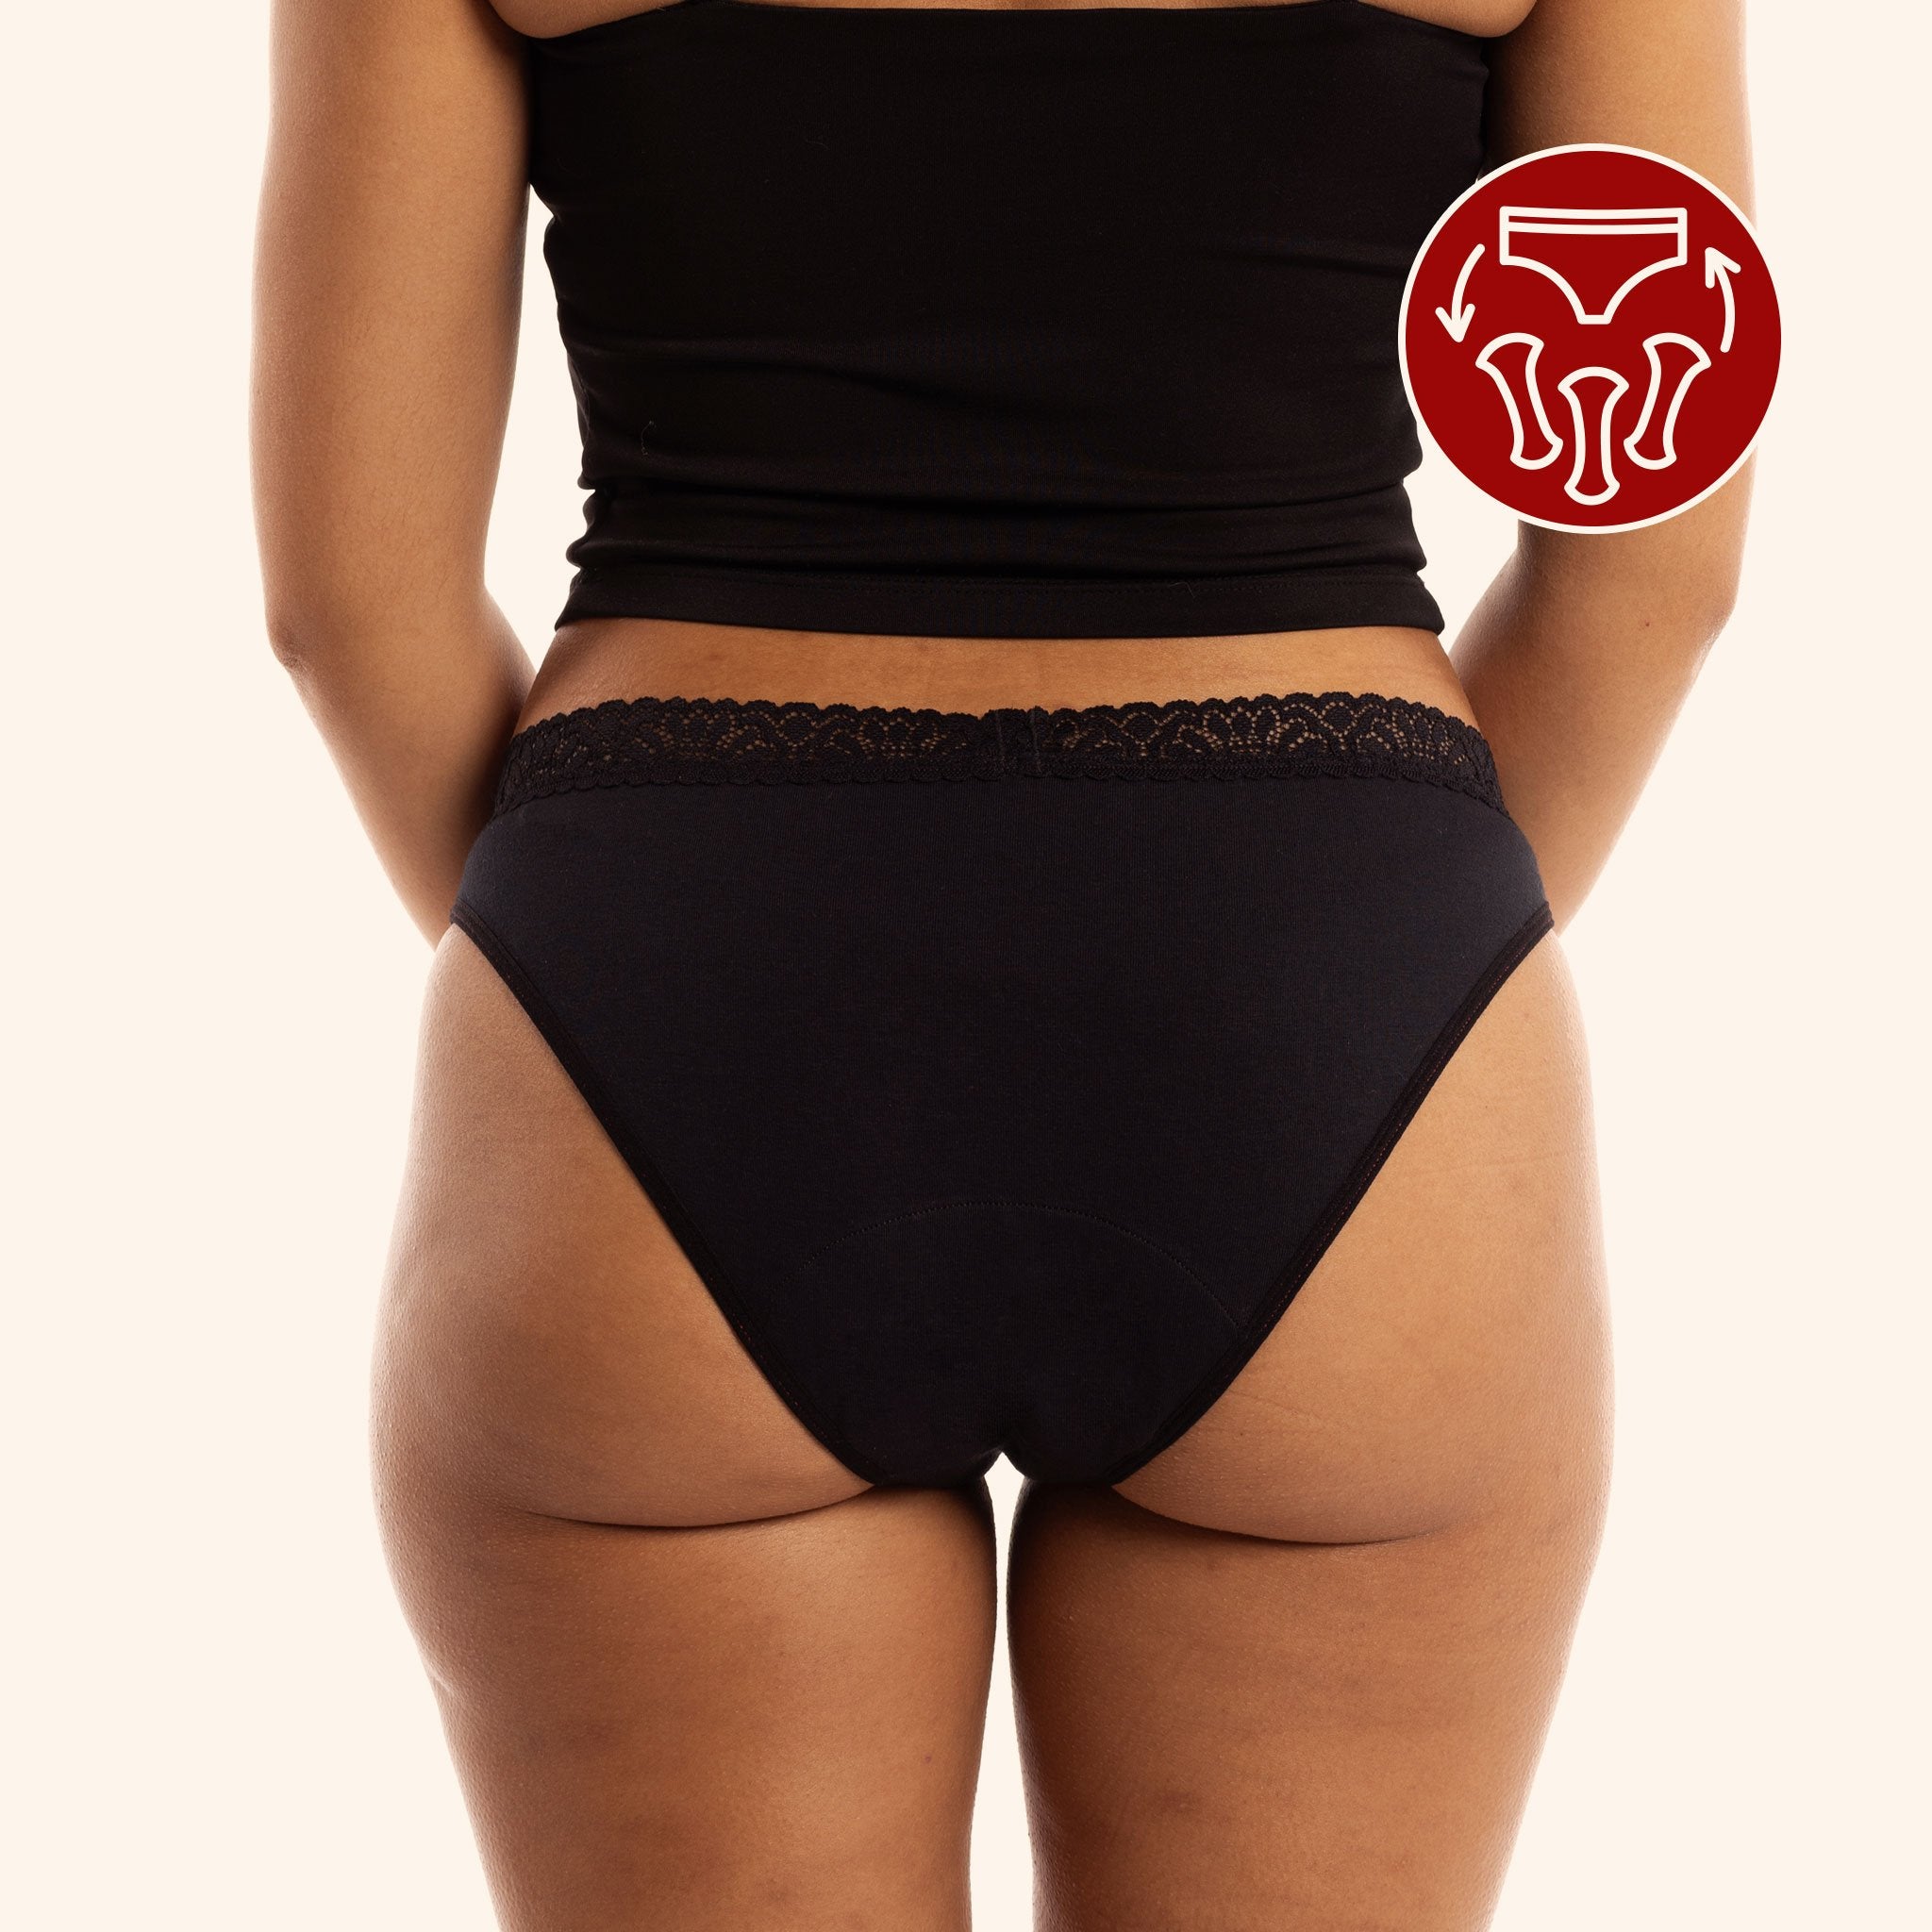 The Bikini Lace - Menstrual panties with 3 pads